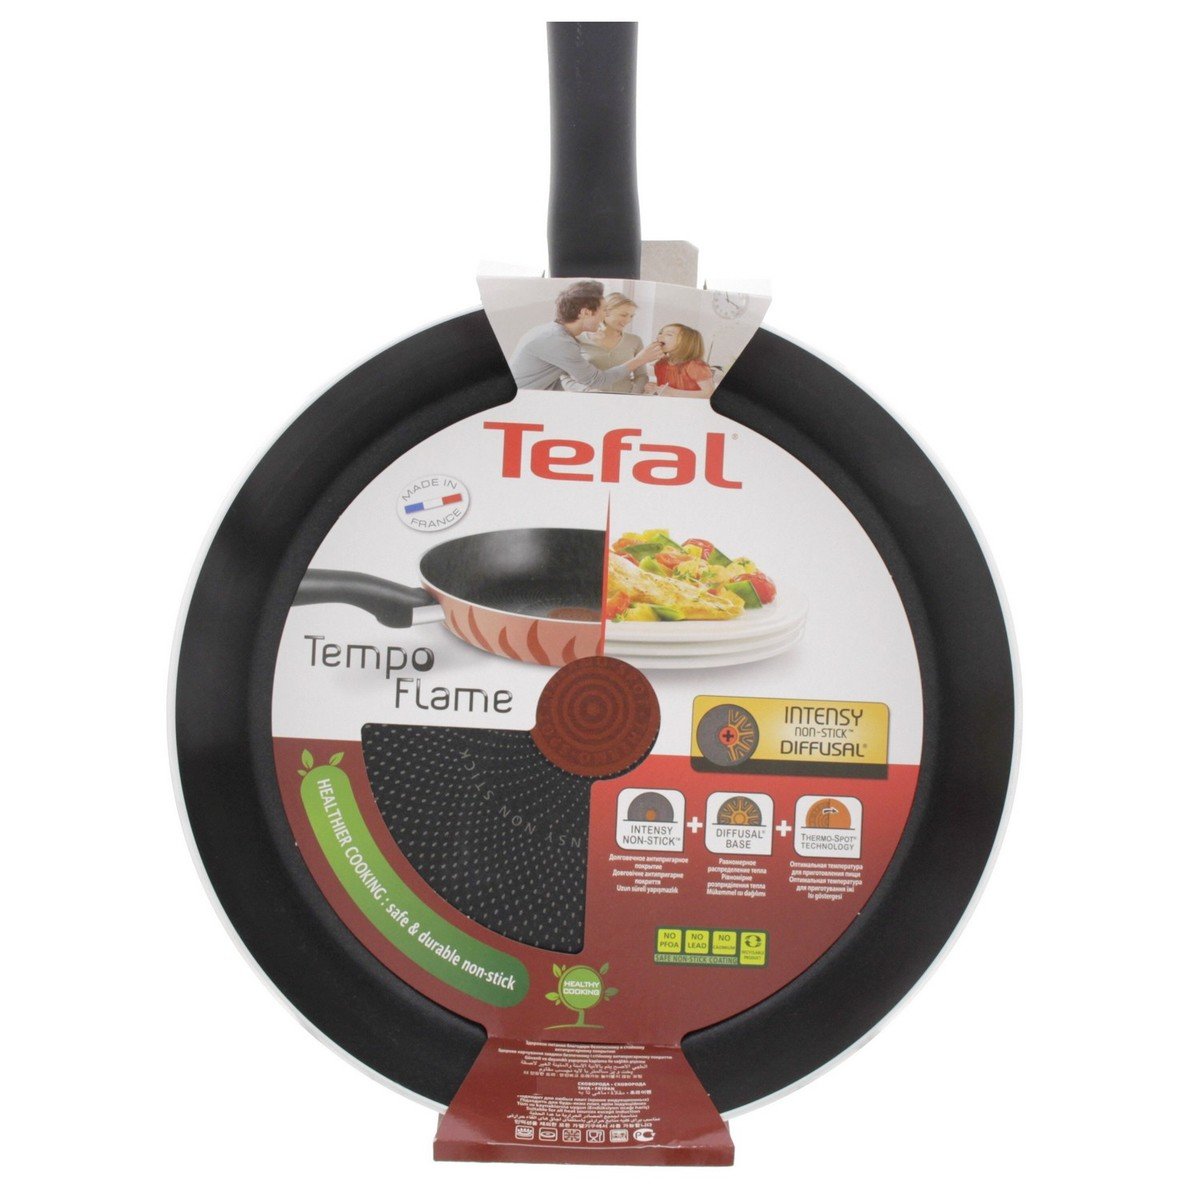 Tefal Tempo Flame Fry Pan C0450762 30cm